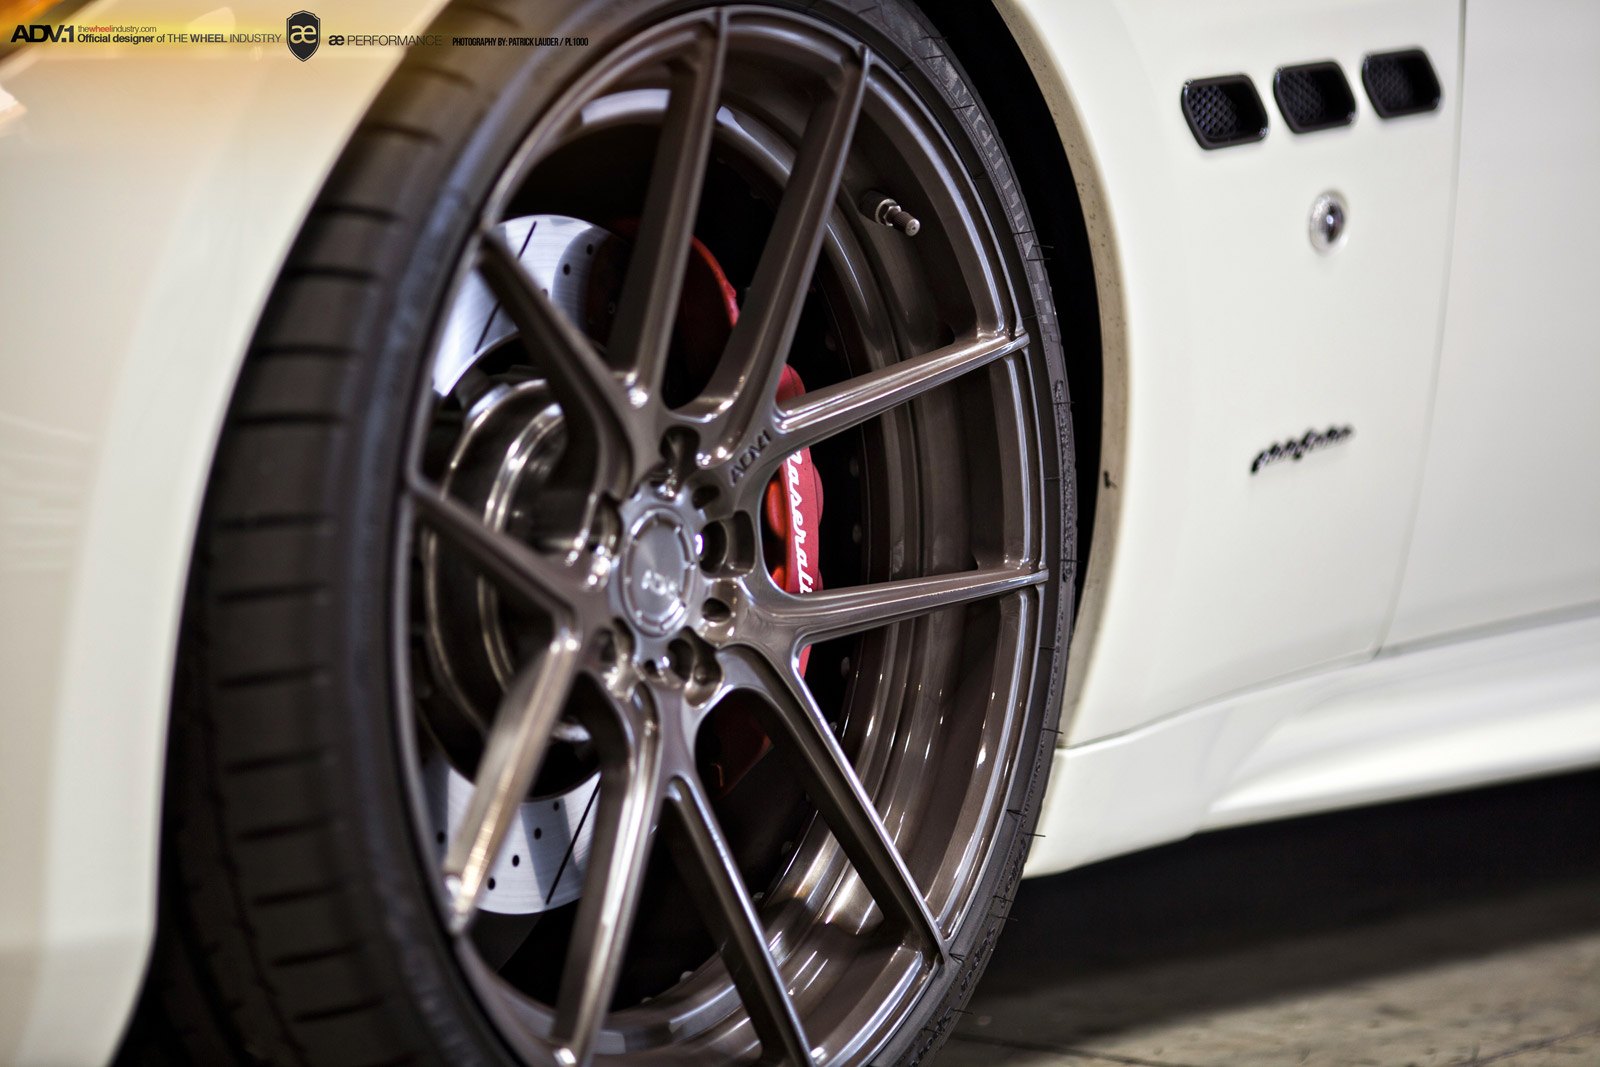 ADV1 Rims with Red Brakes on White Maserati Granturismo - Photo by ADV.1